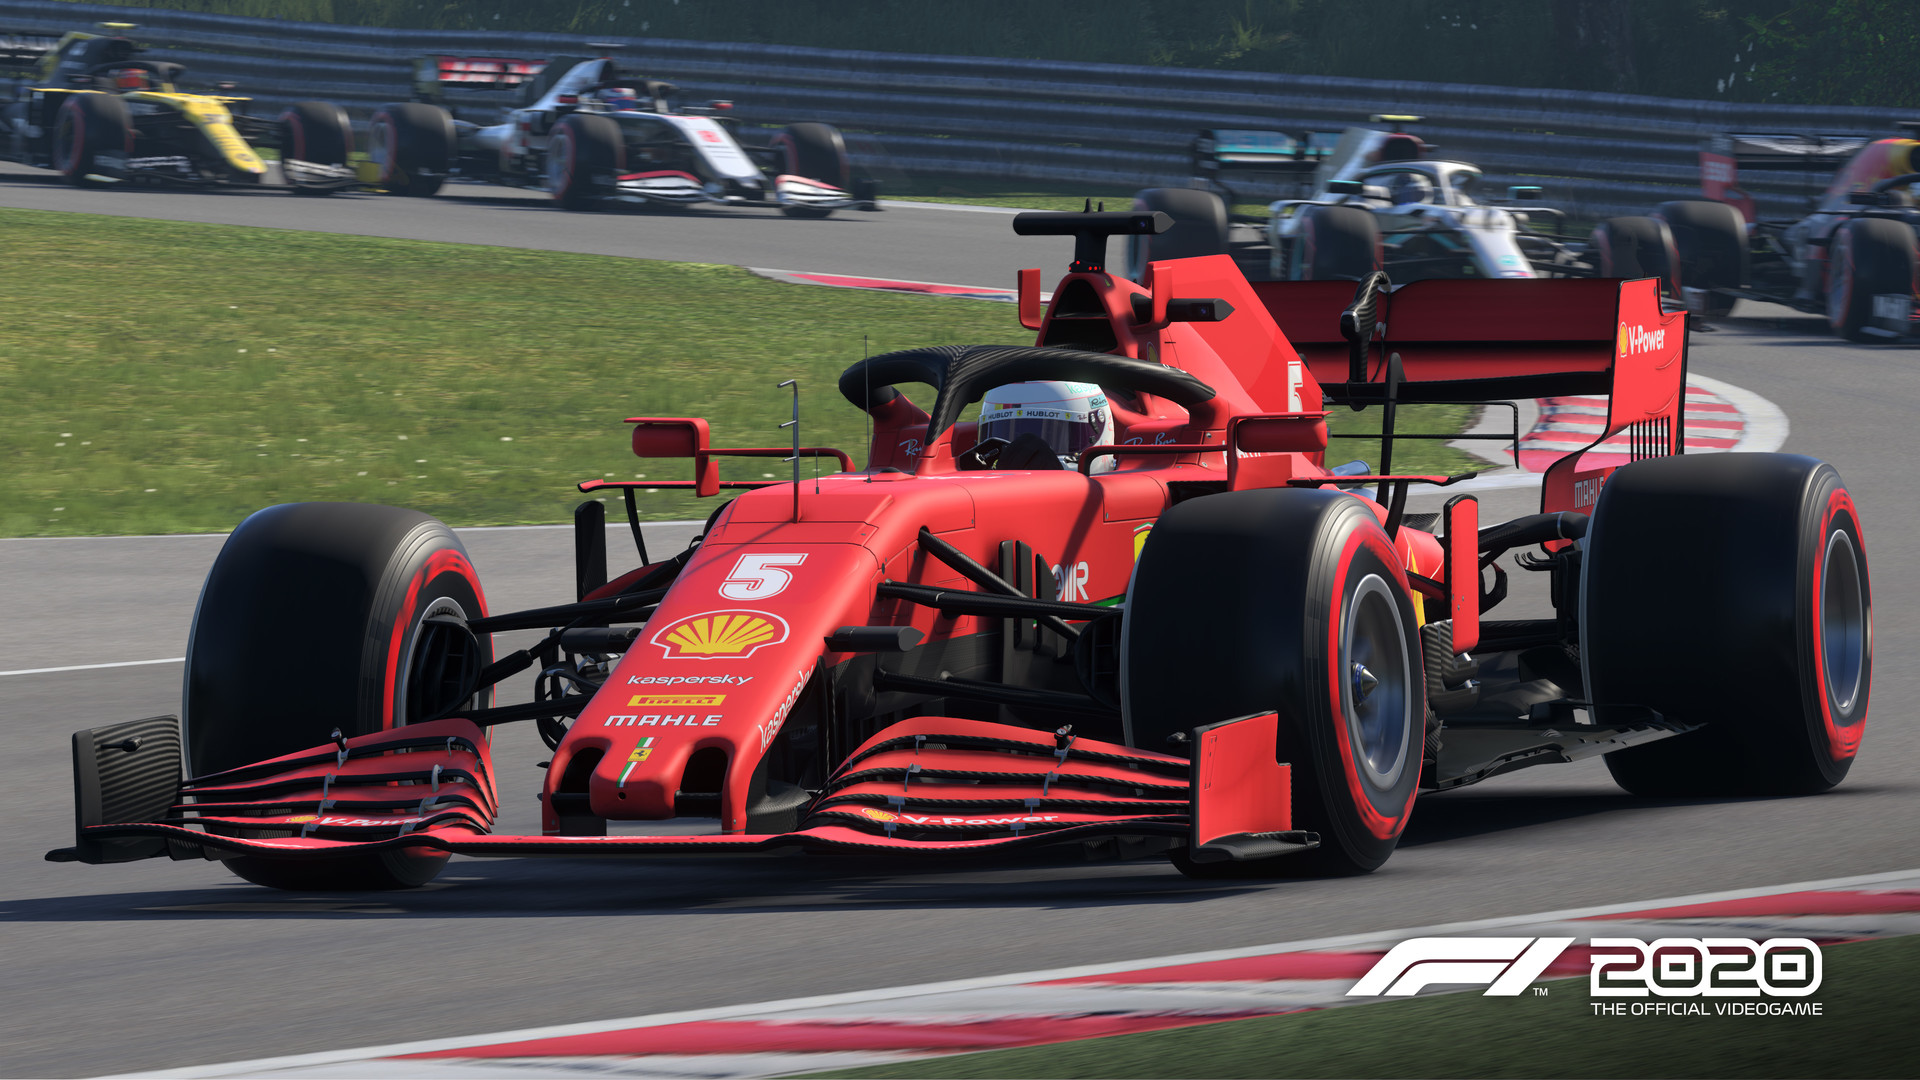 F1 2020 Download PC Game Full Version Unlocked + Crack ...